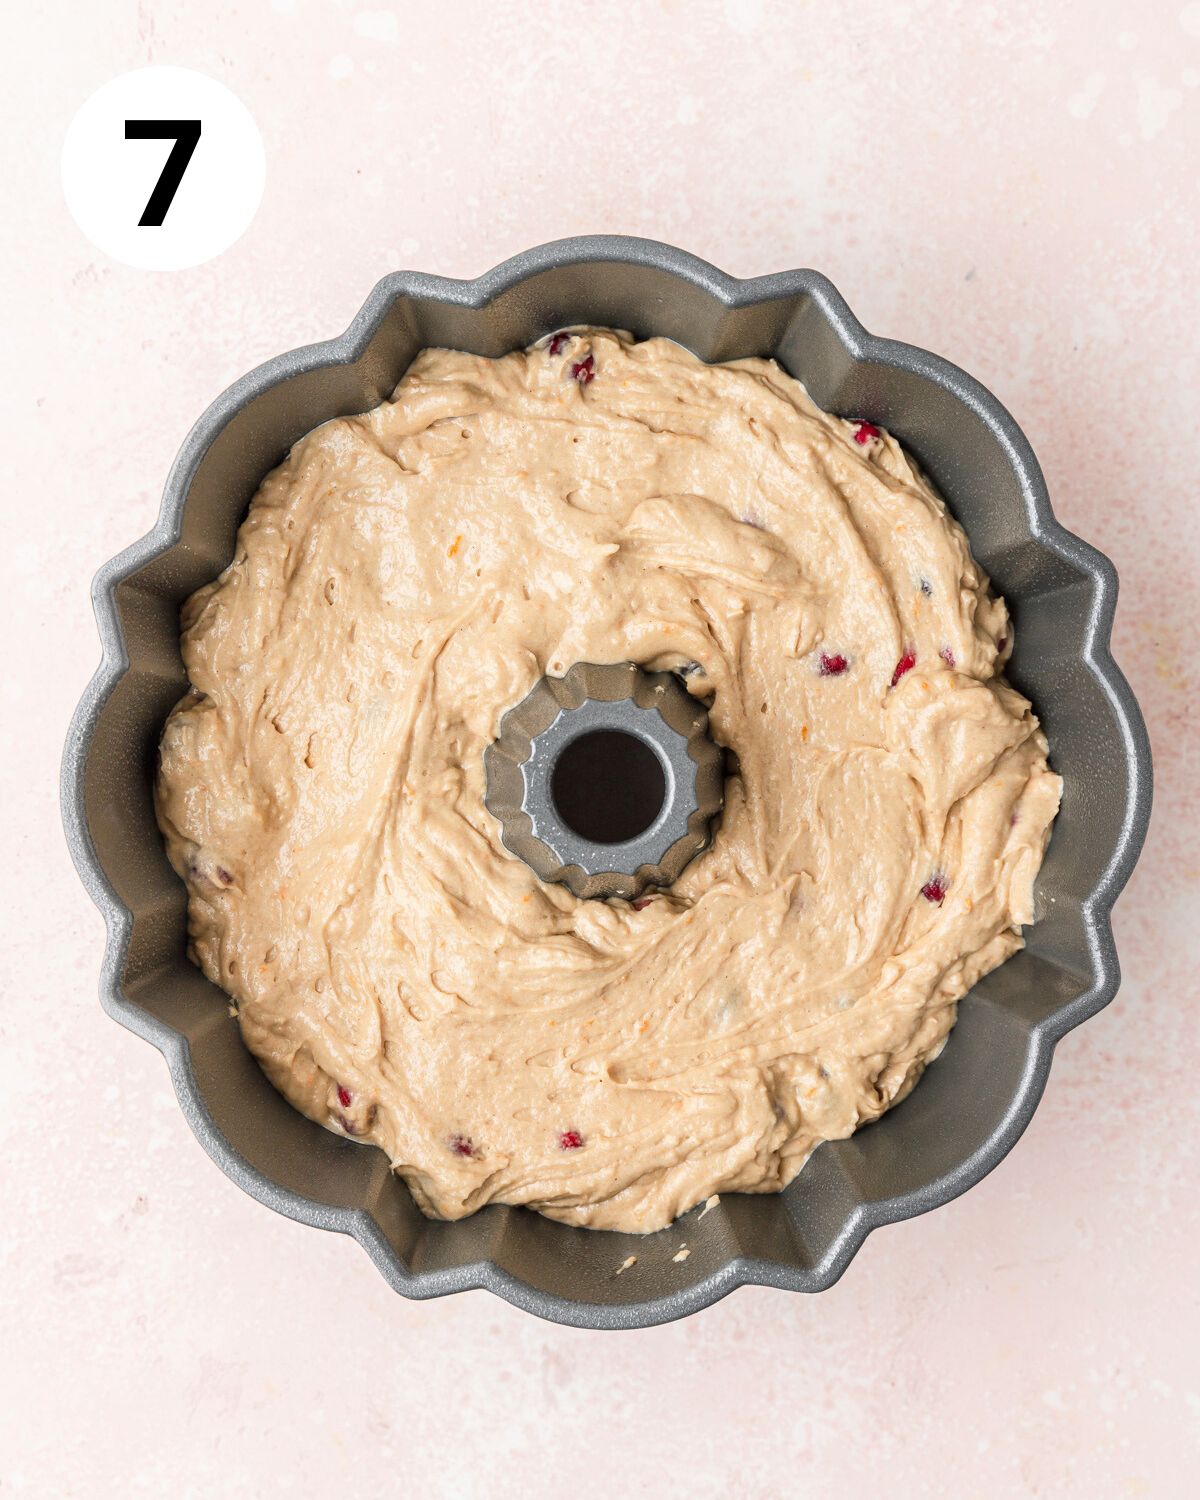 cranberry cake batter in bundt pan before baking.